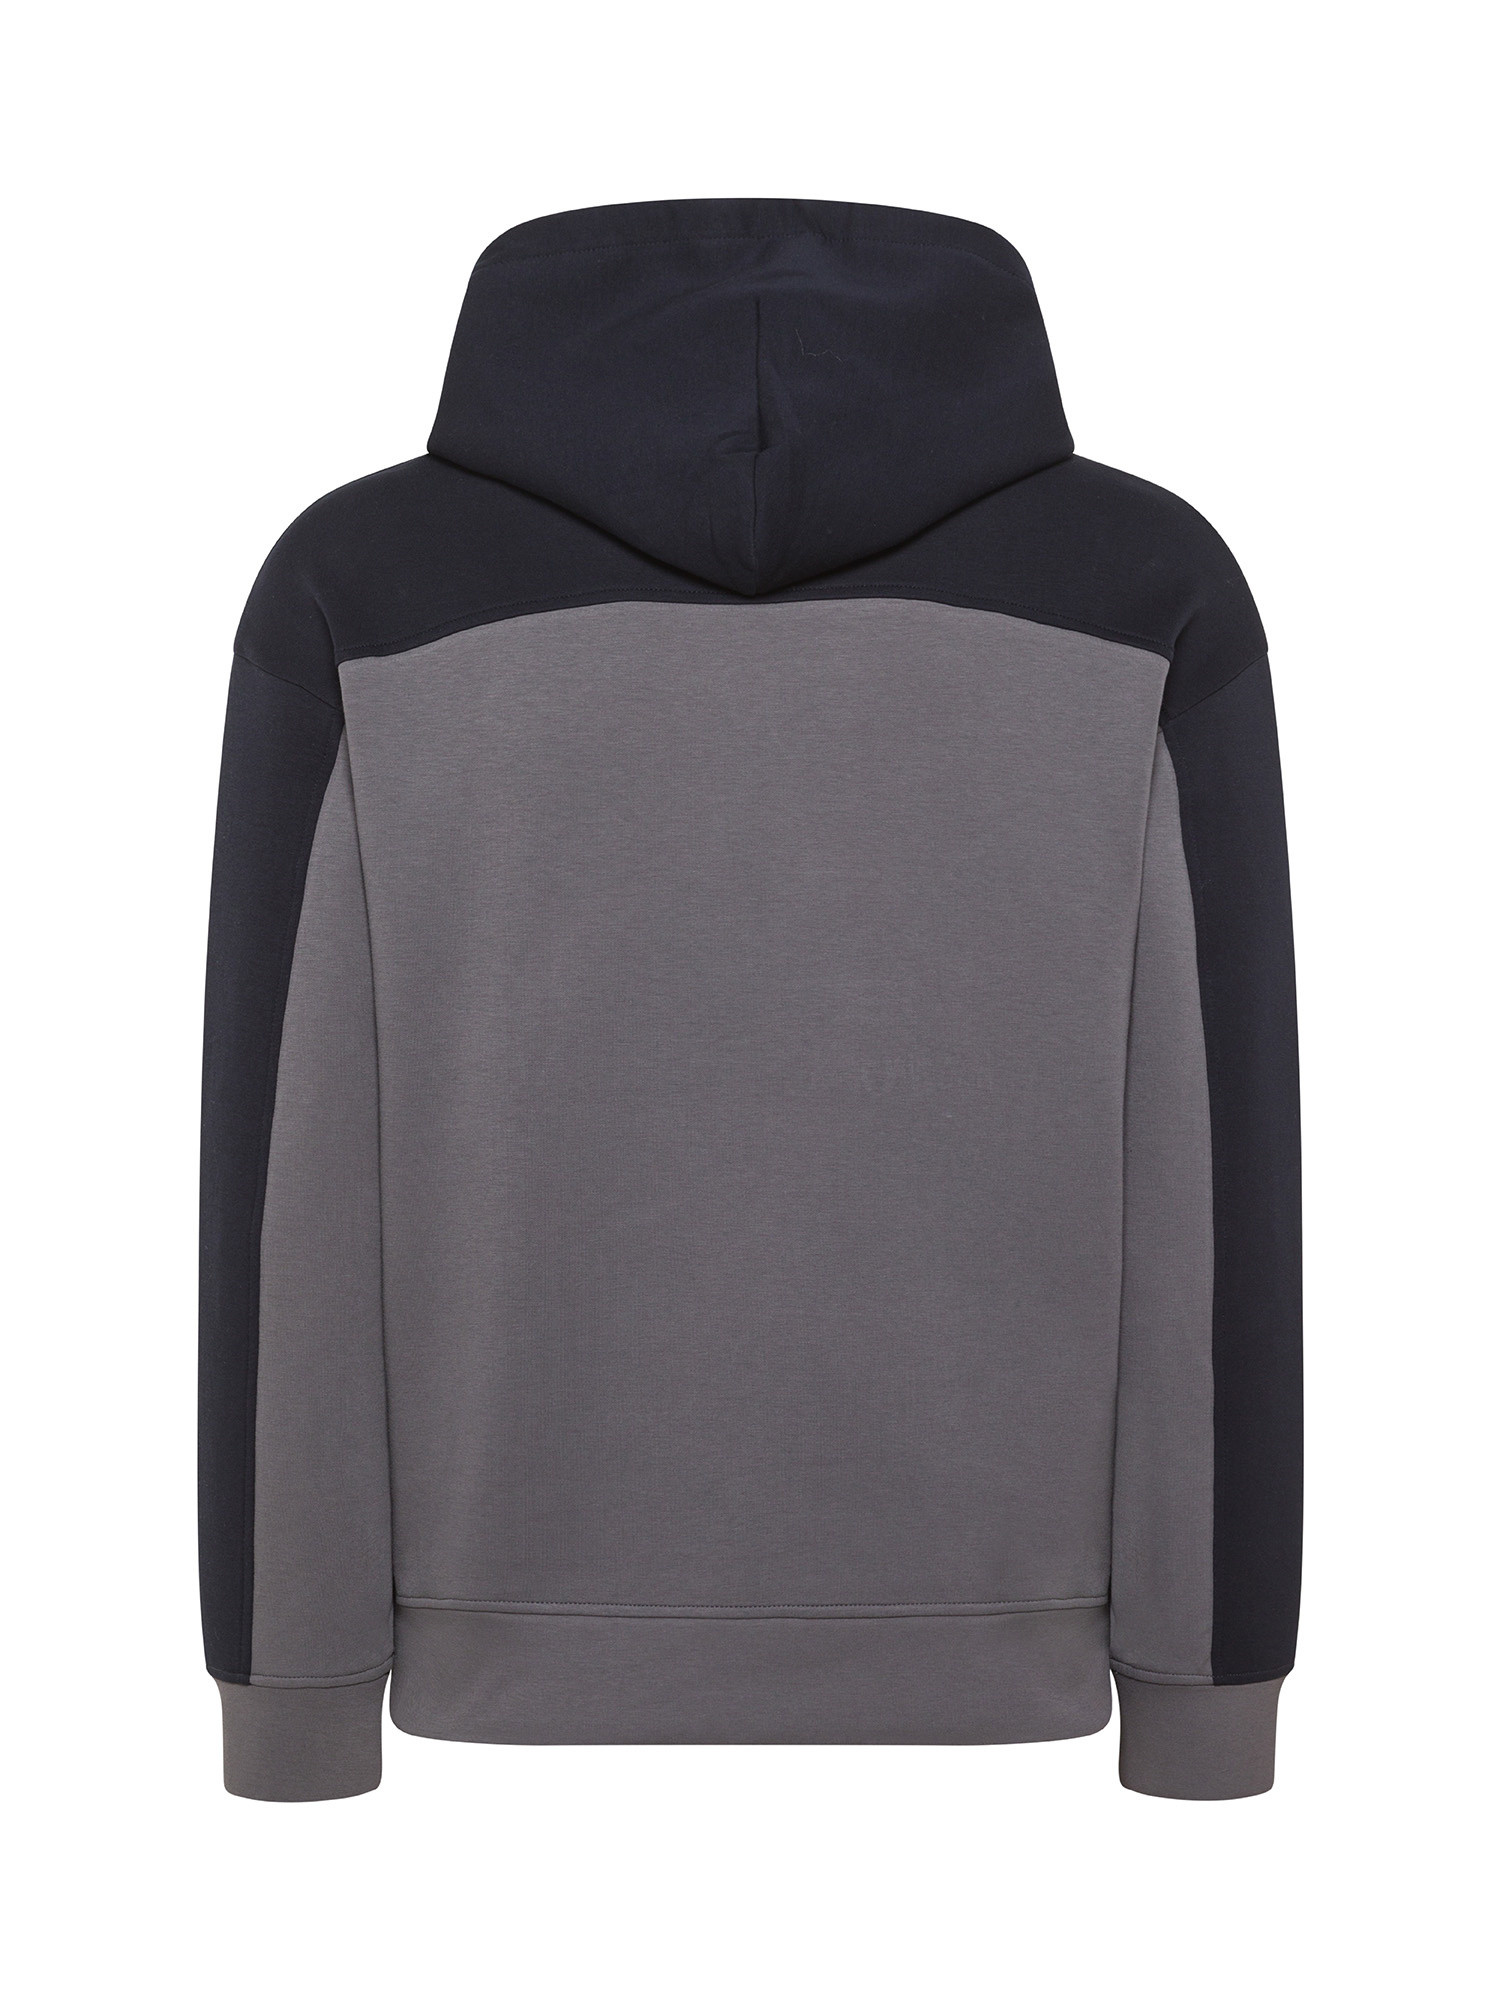 Emporio Armani - Sweatshirt with hood and logo, Grey, large image number 1